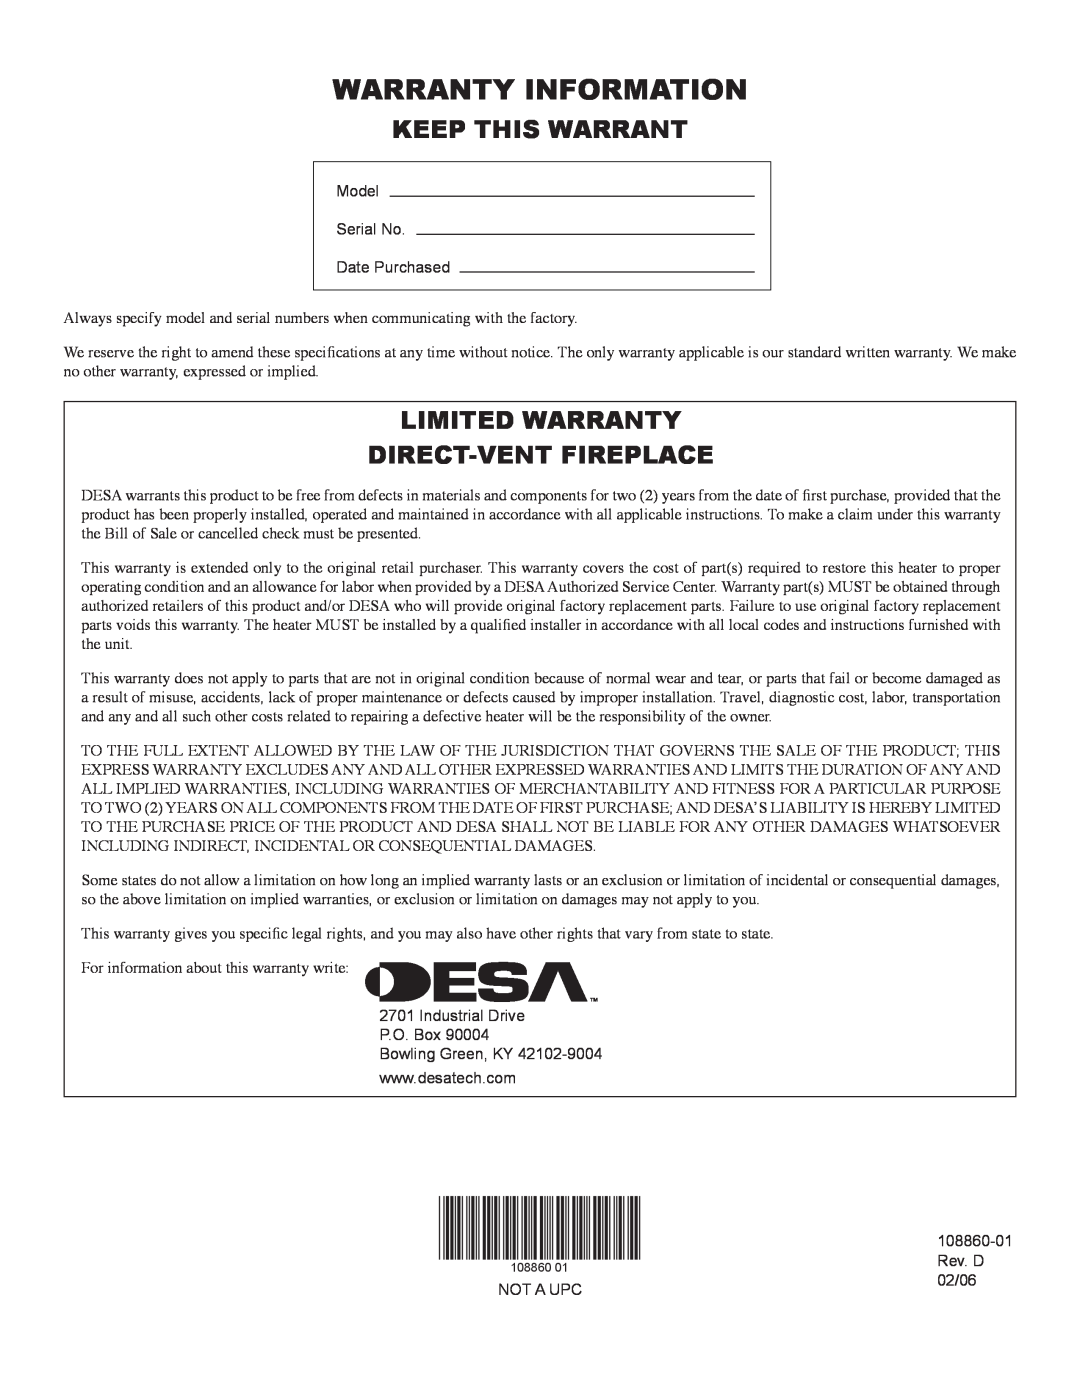 Desa (V)T32EN installation manual Warranty Information, Keep This Warrant, Limited Warranty Direct-Vent Fireplace 